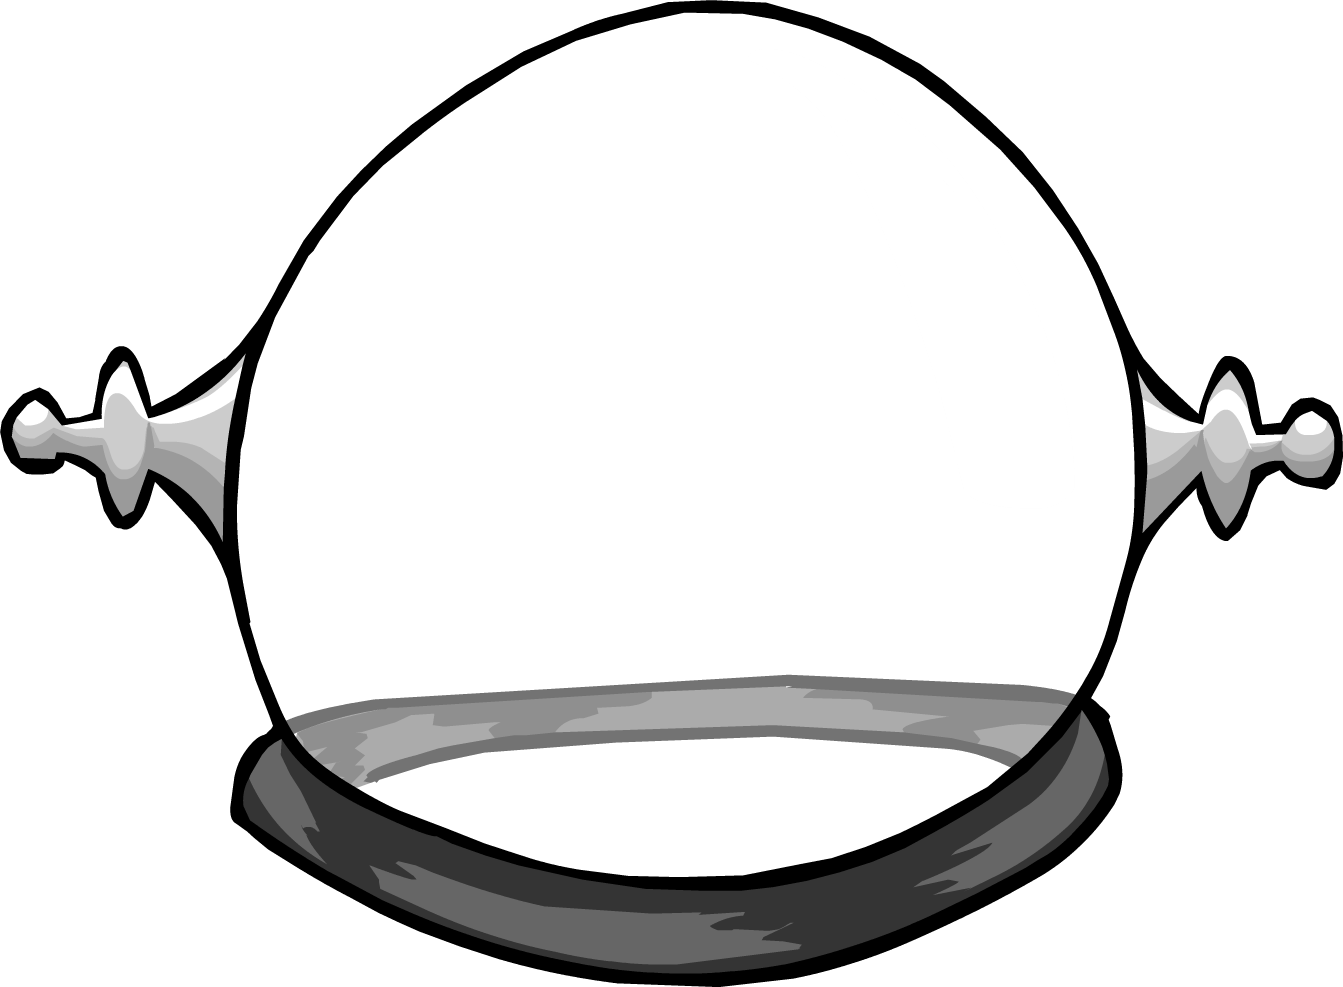 Space Helmet - Club Penguin Wiki - The free, editable encyclopedia